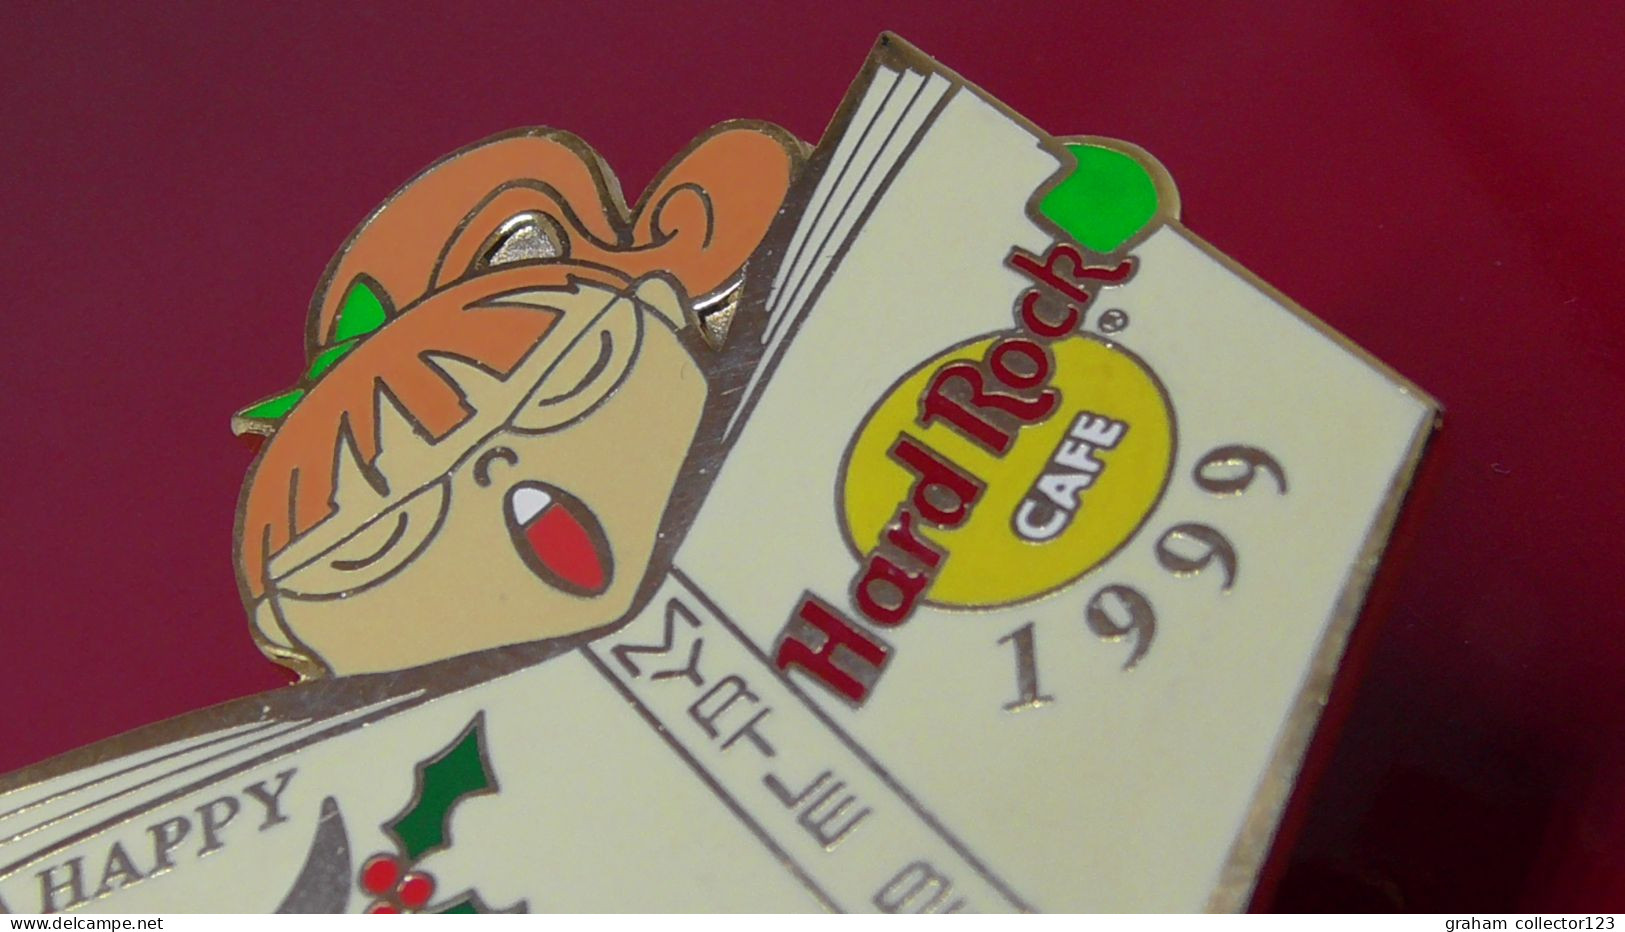 Hard Rock Cafe Enamel Pin Badge Myrtle Beach USA Caroler Carol Singer 1999 Festive Christmas Happy Holidays